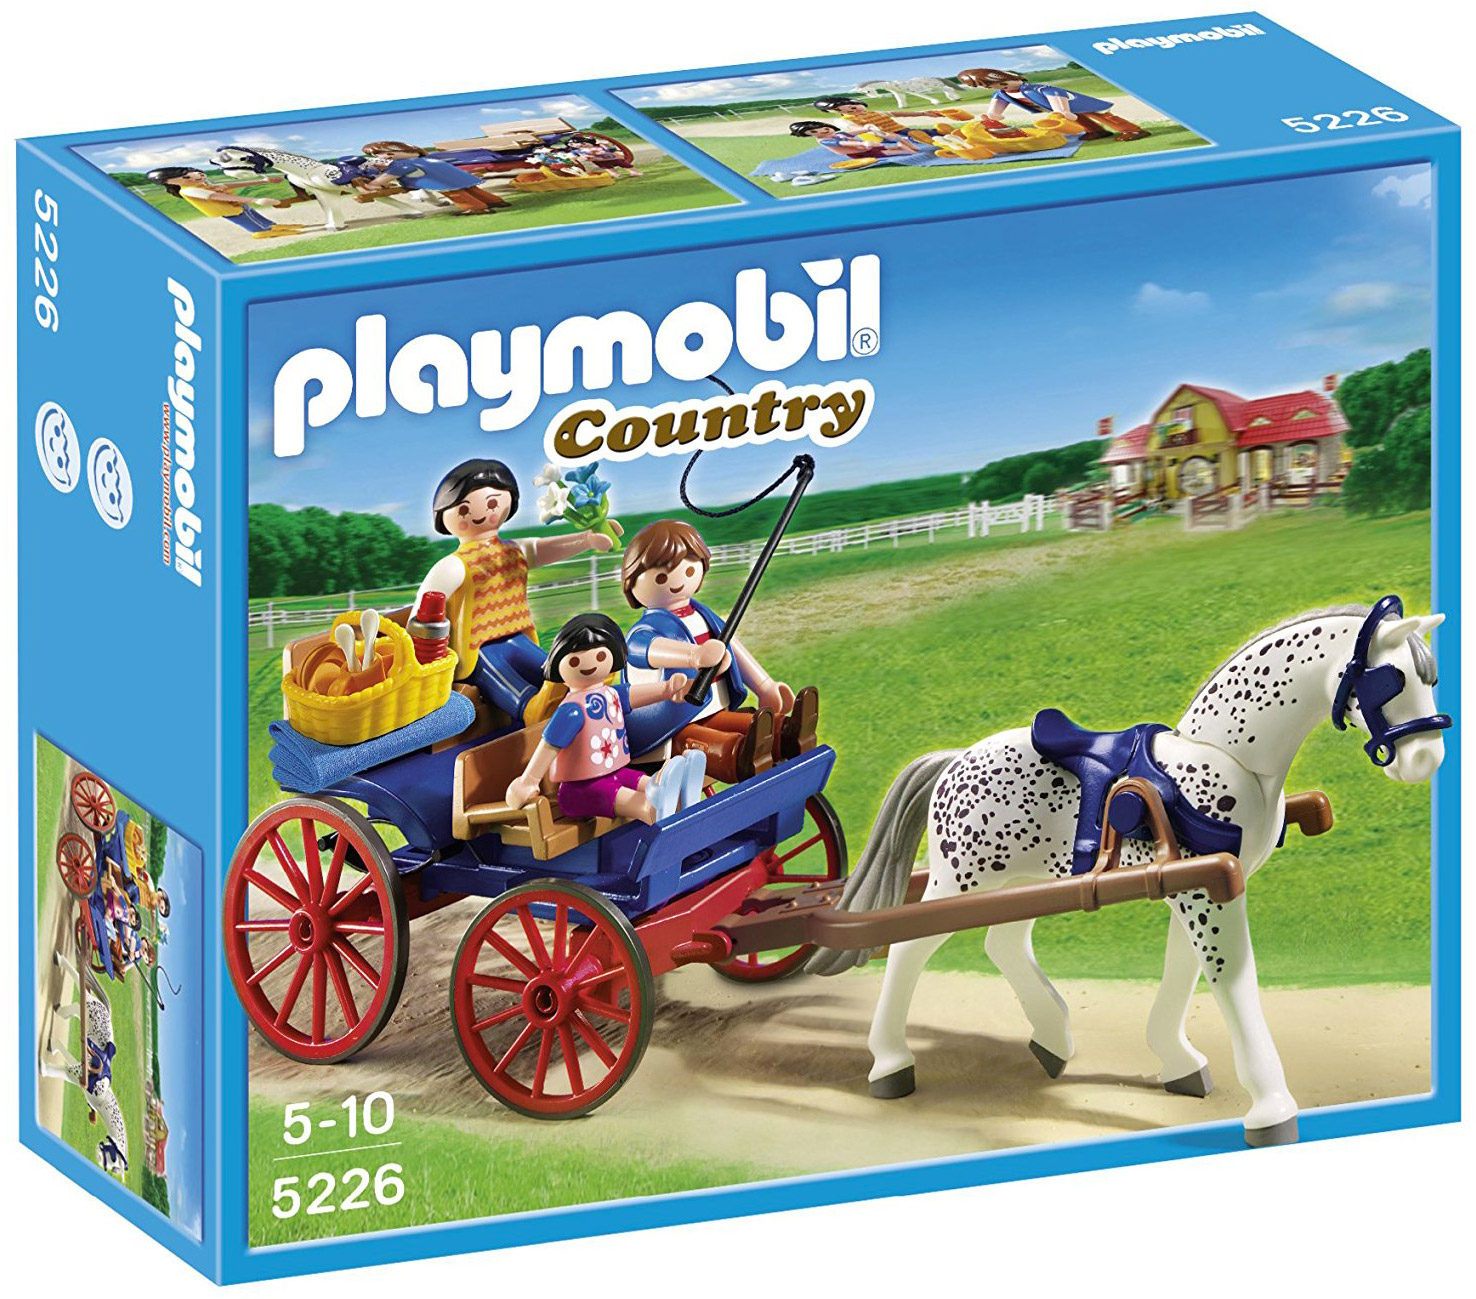 Playmobil Country 5226 pas cher, Calèche avec famille